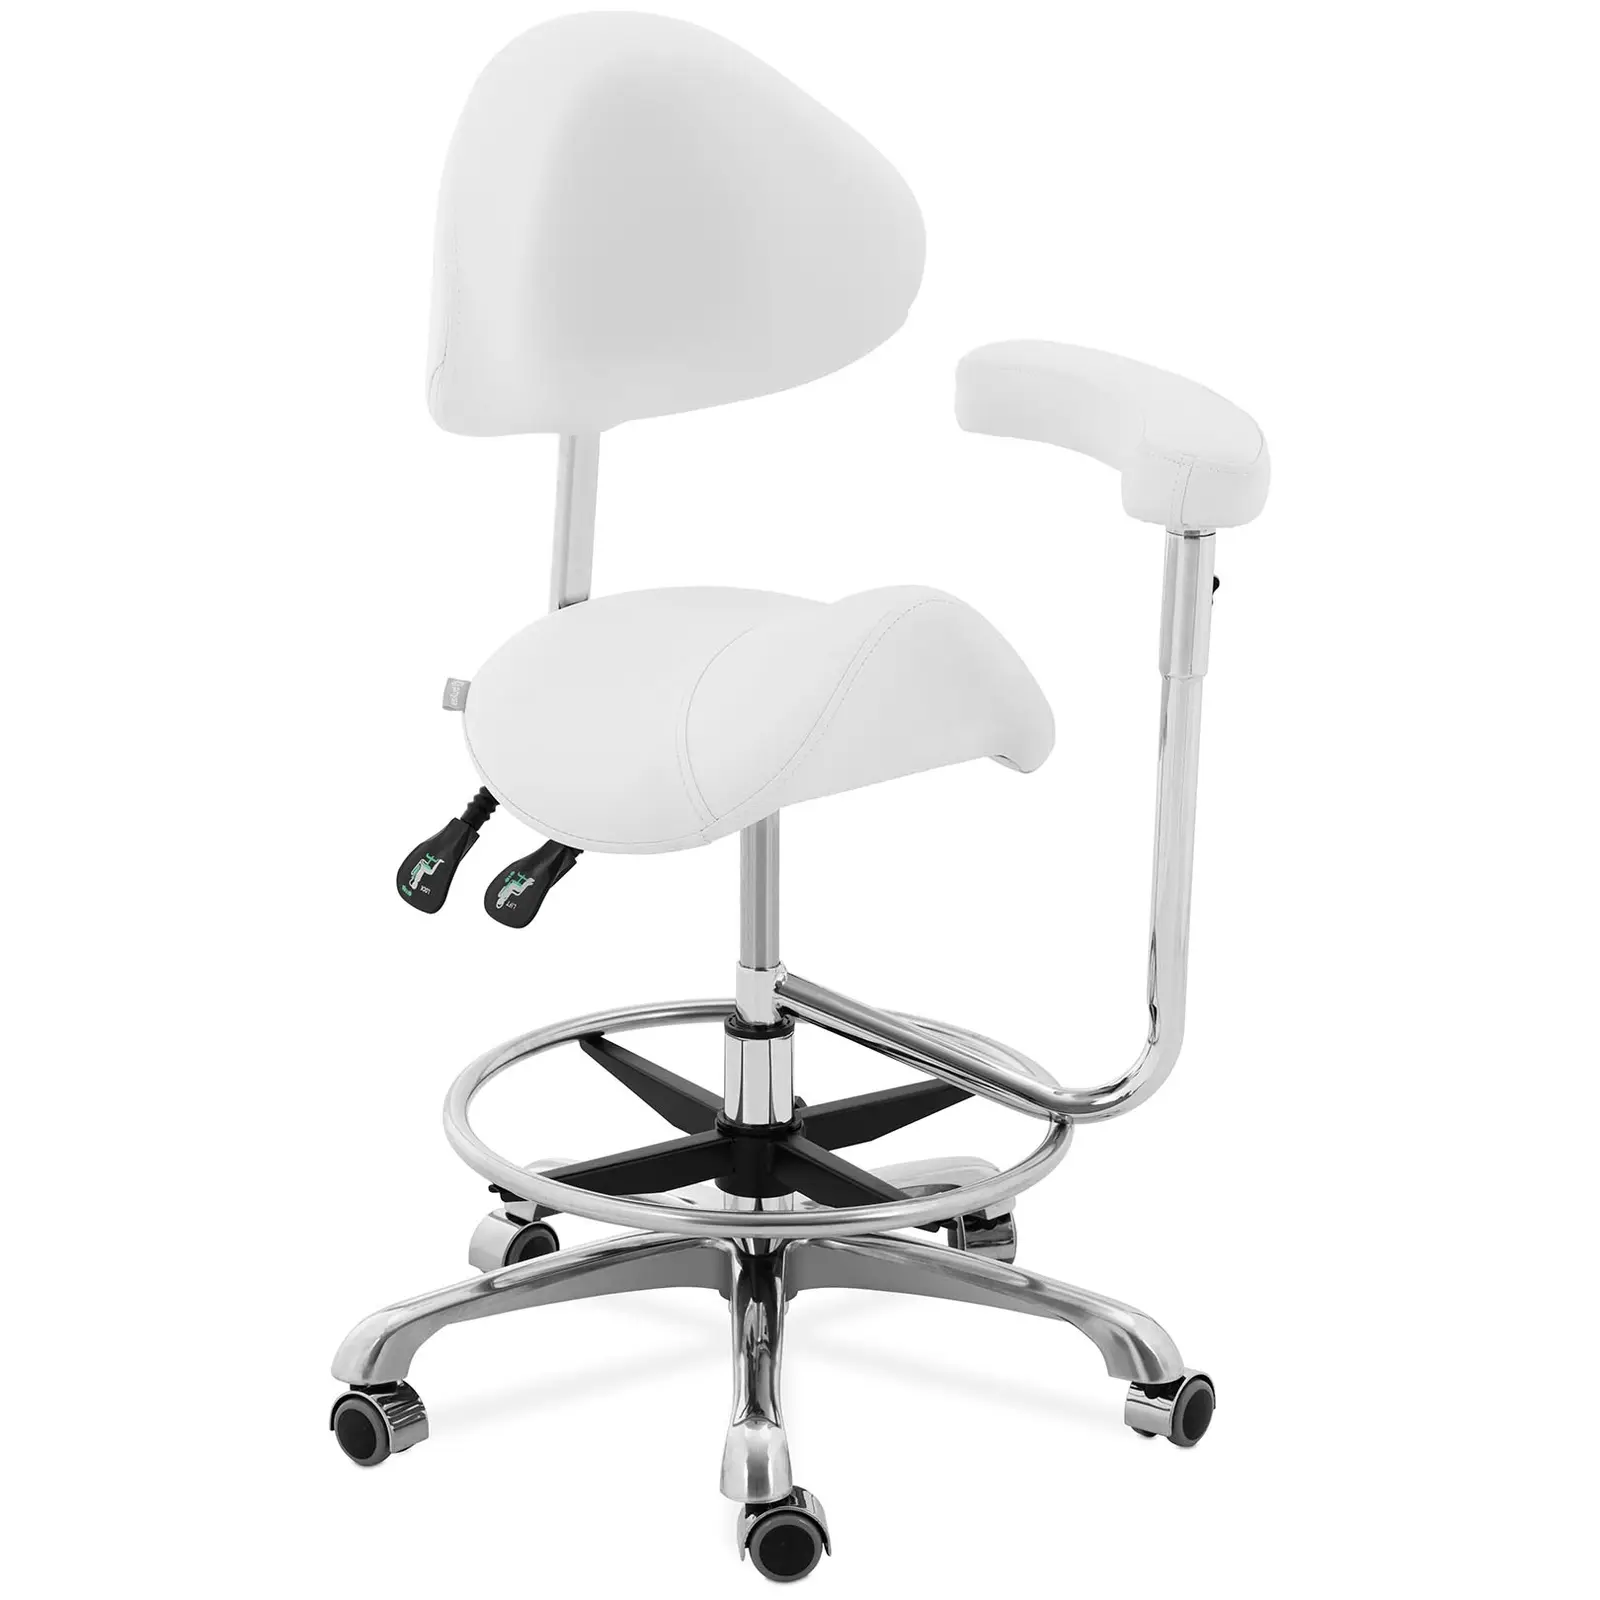 Stolica s naslonom za ruke - naslon za leđa i sjedalo podesivi po visini - 51 - 61 cm - 150 kg - Bijela